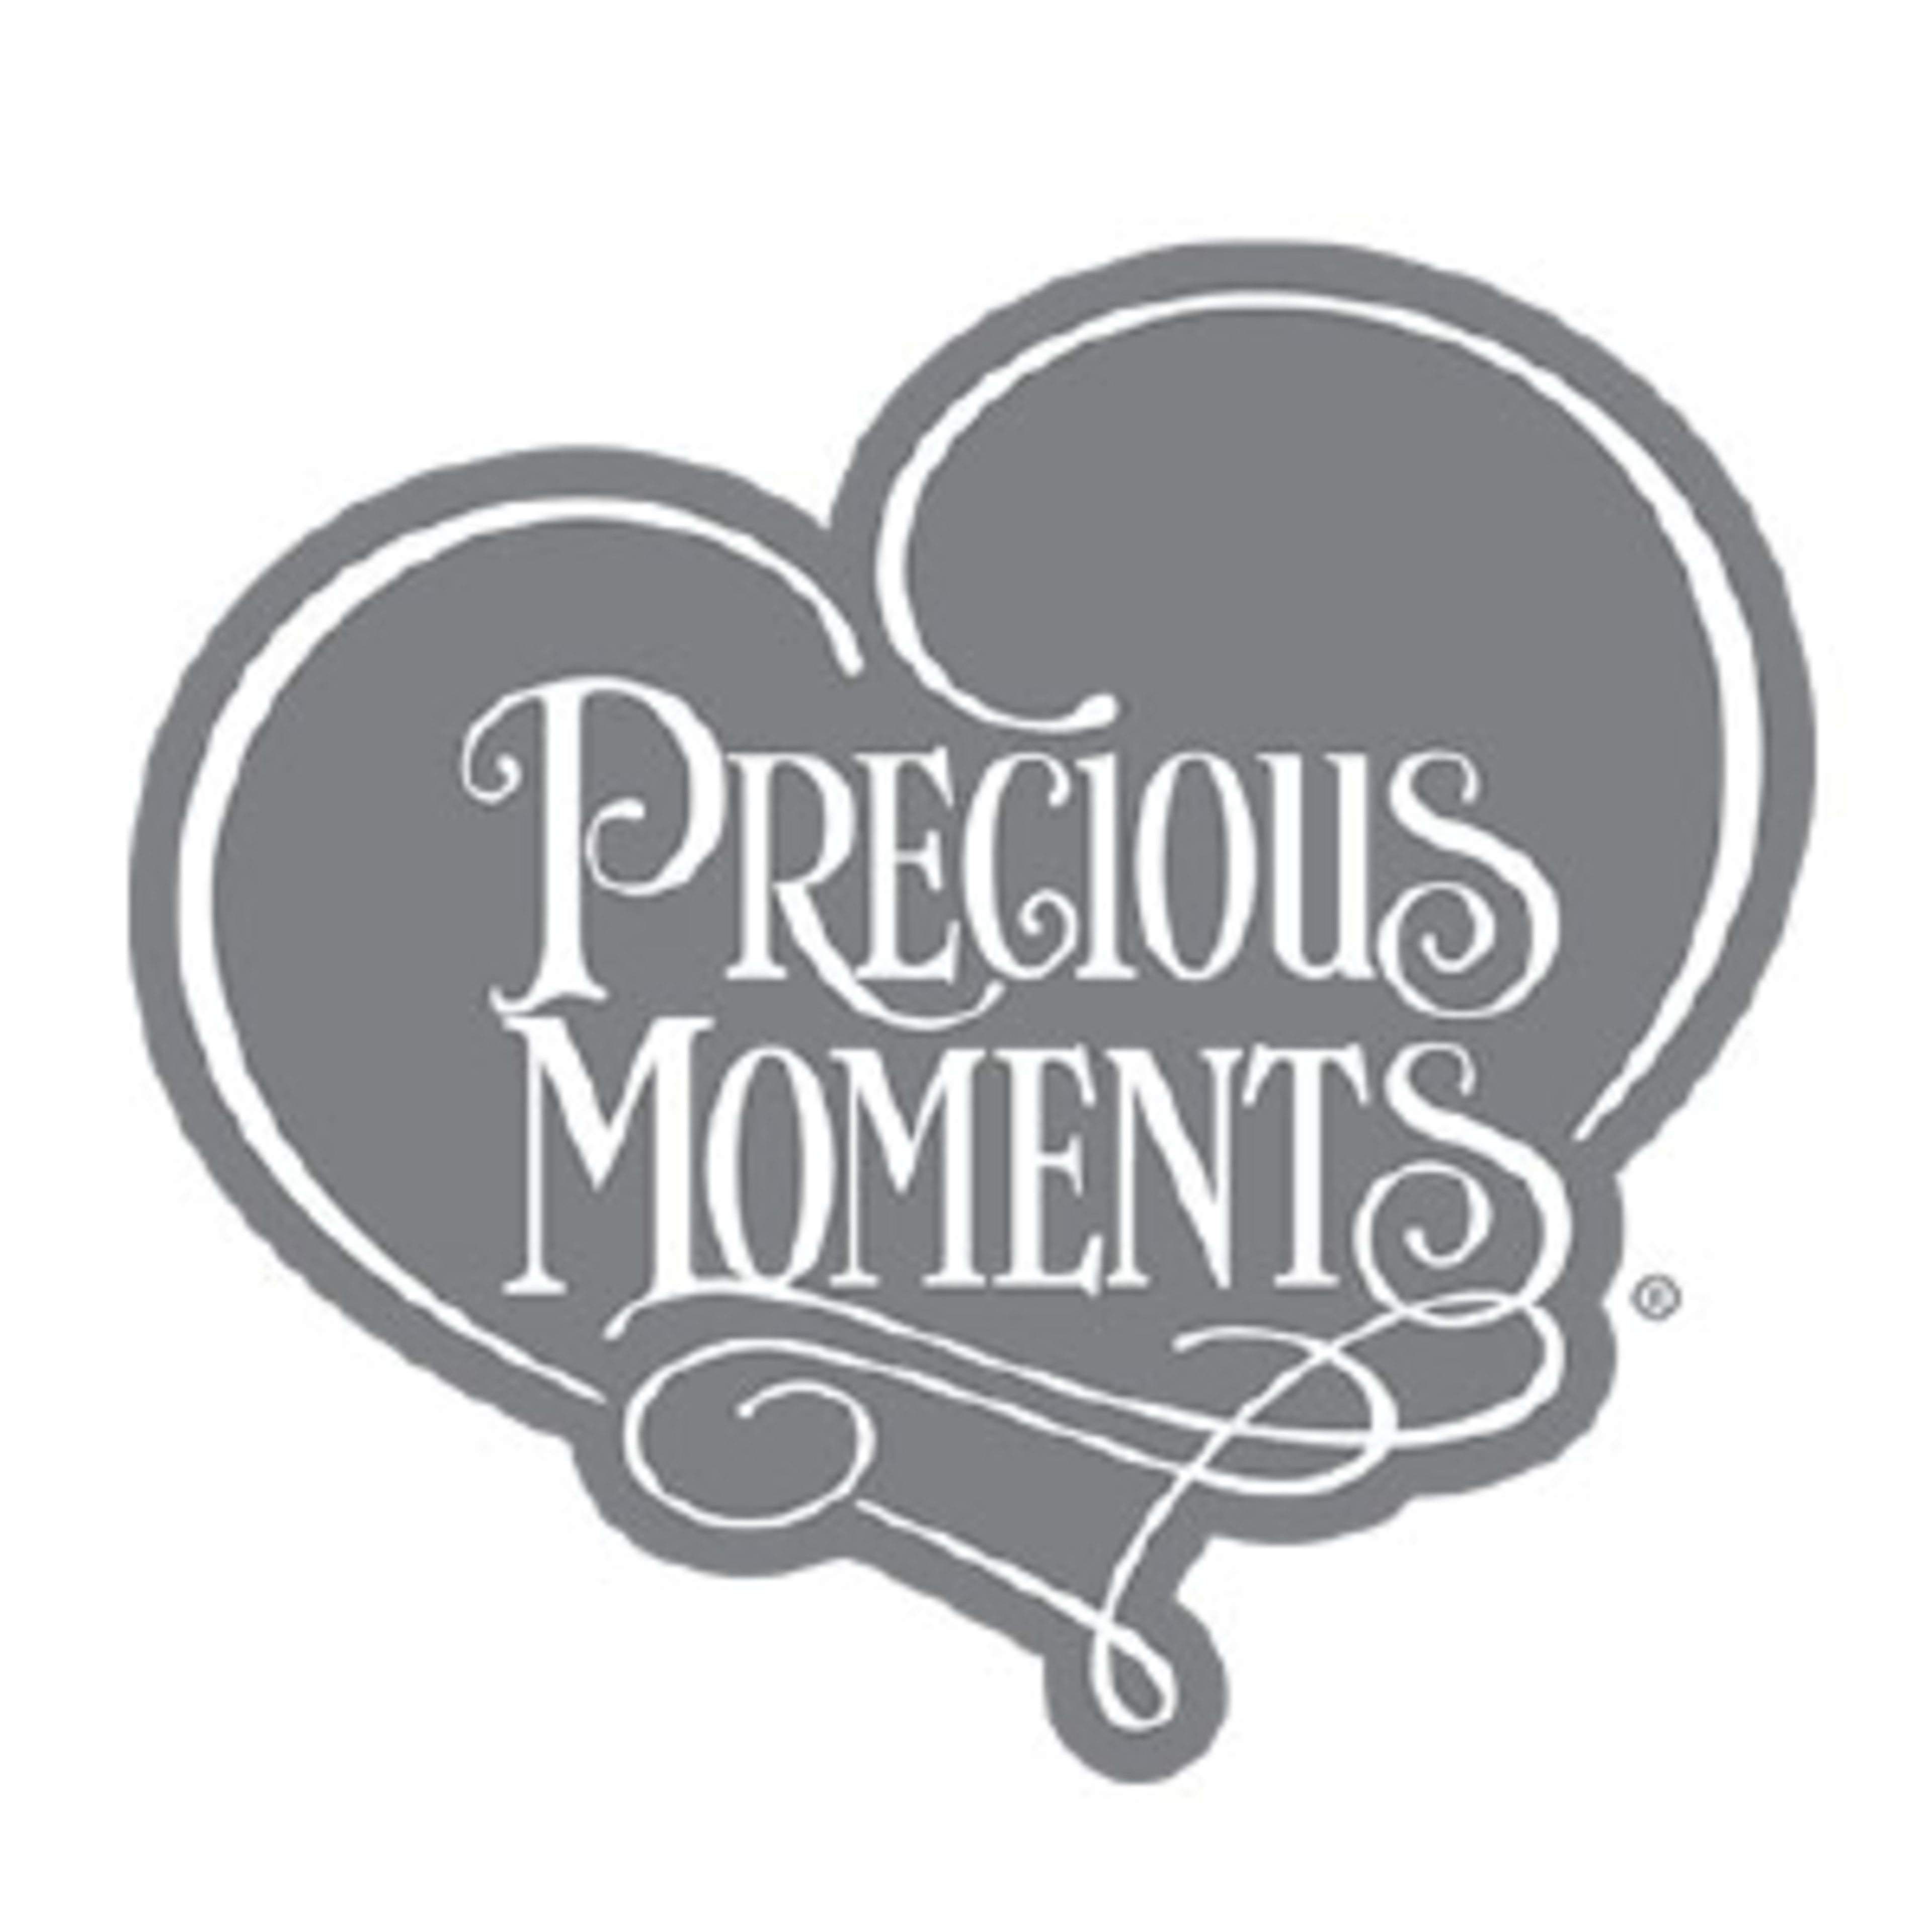 Precious Moments Code